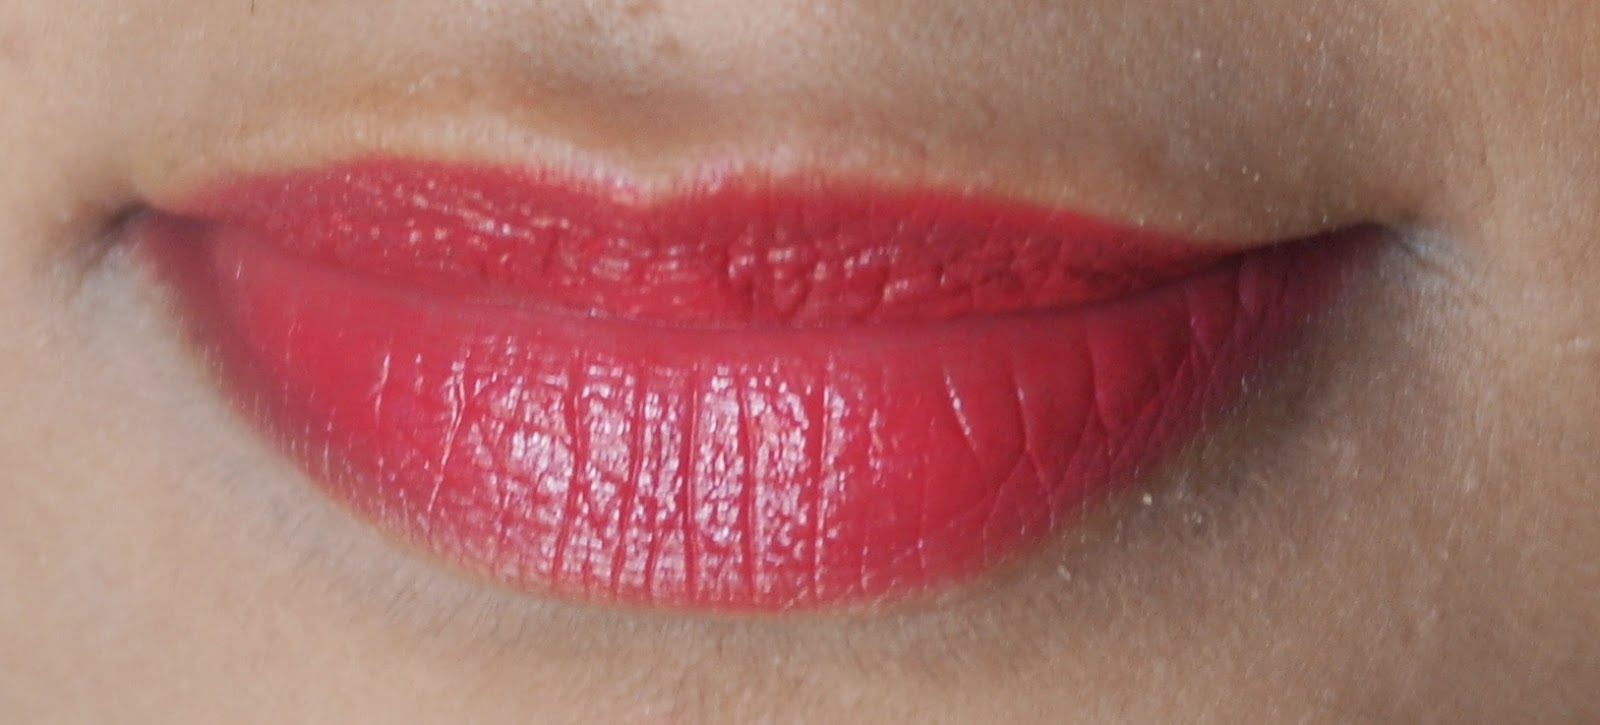 Revlon super lustrous lipstick swatches on lips images